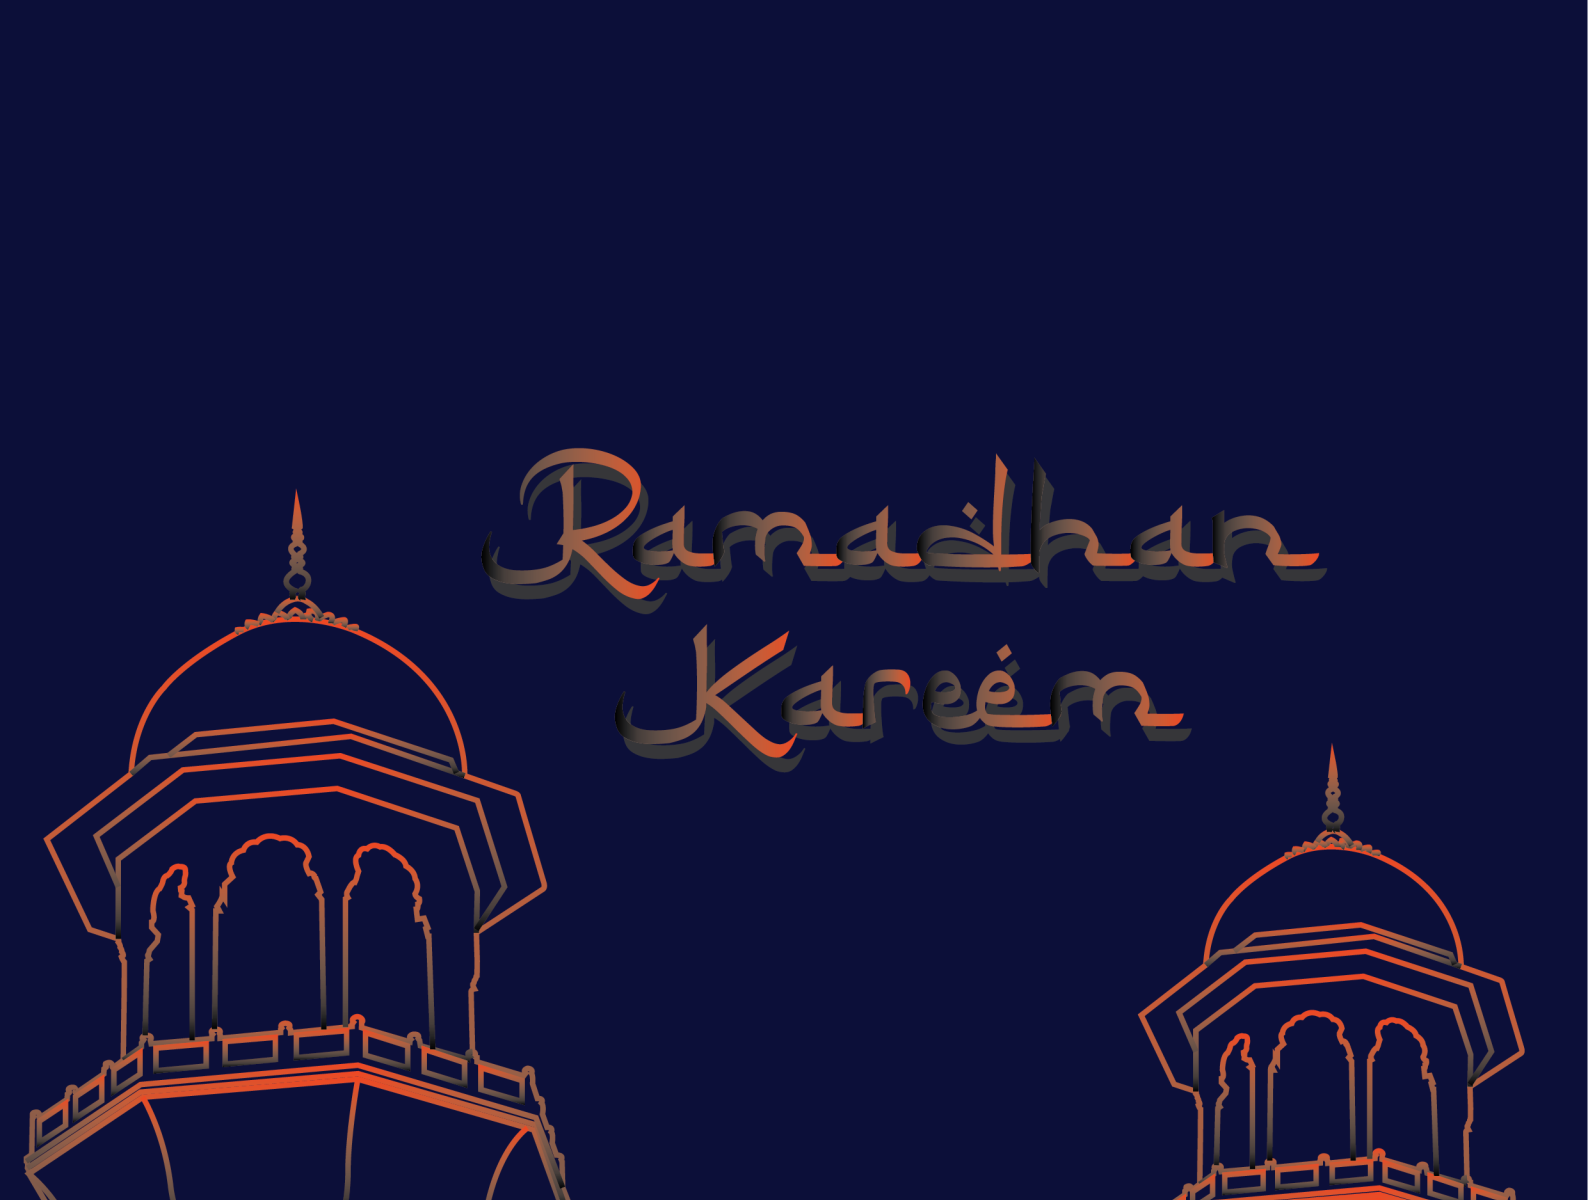 Обои в стиле рамадан. Рамадан обои. Рамадан логотип. Ramadan Kareem в орнаменте.